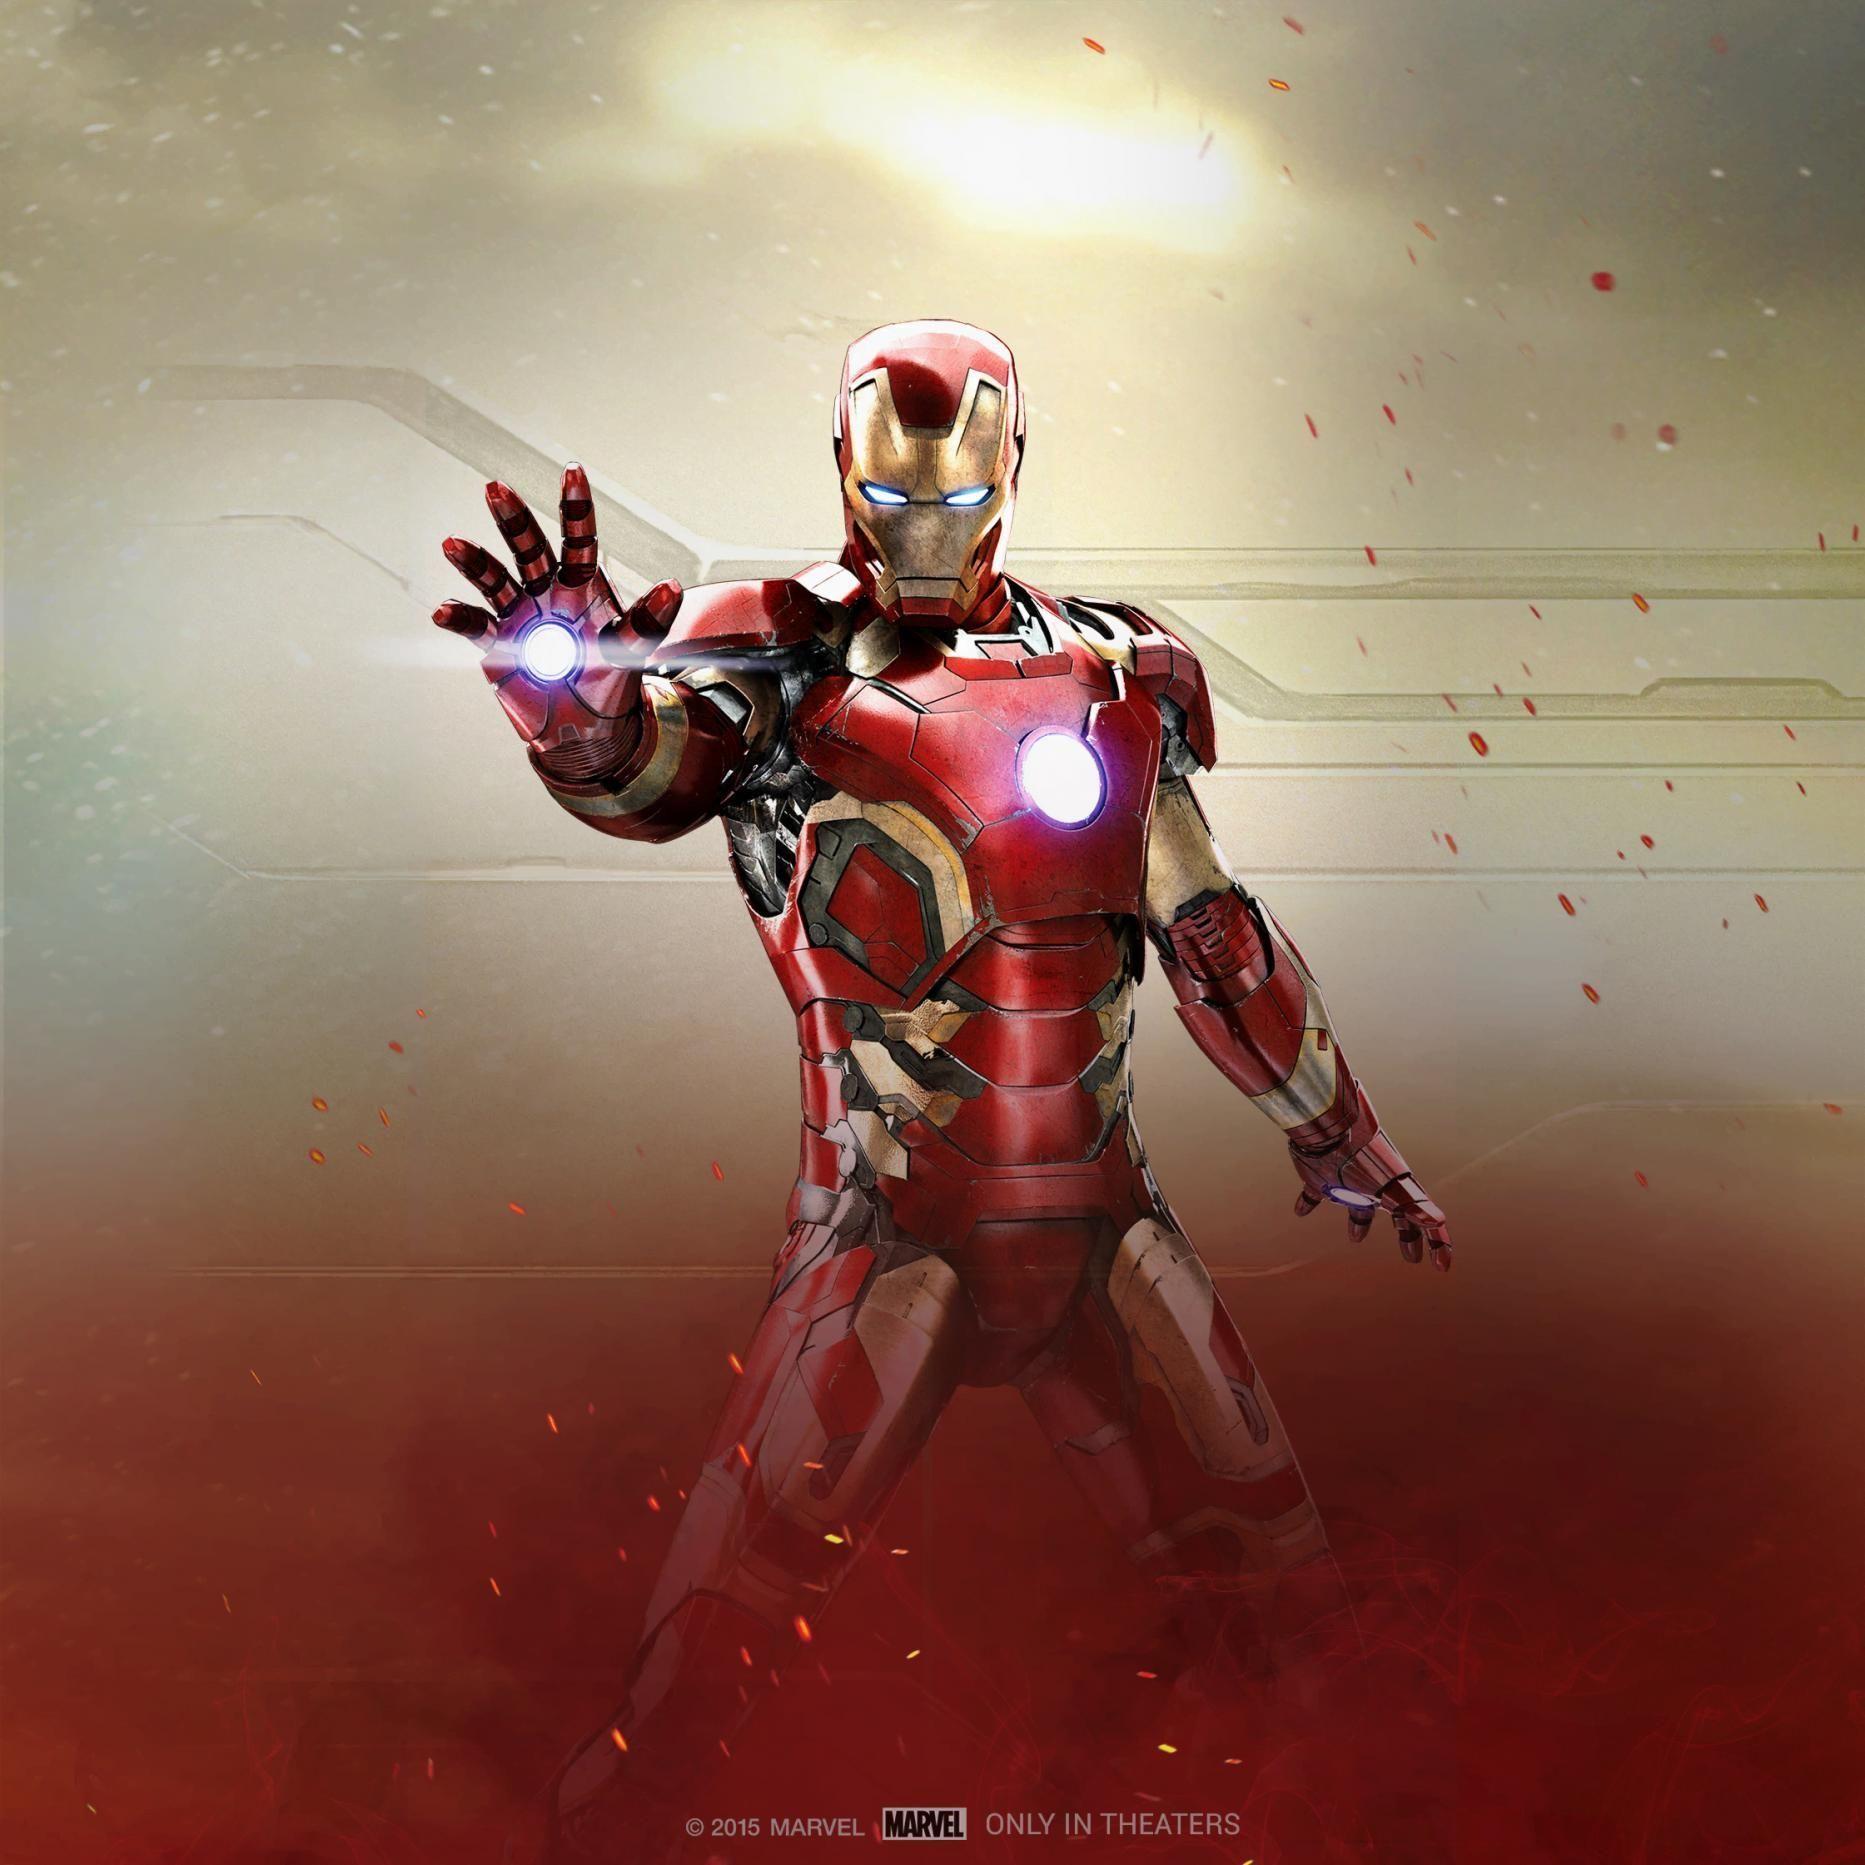 Theme] [CM12.1] S6 Iron Man Theme For CM12.1 From S6 EDGE